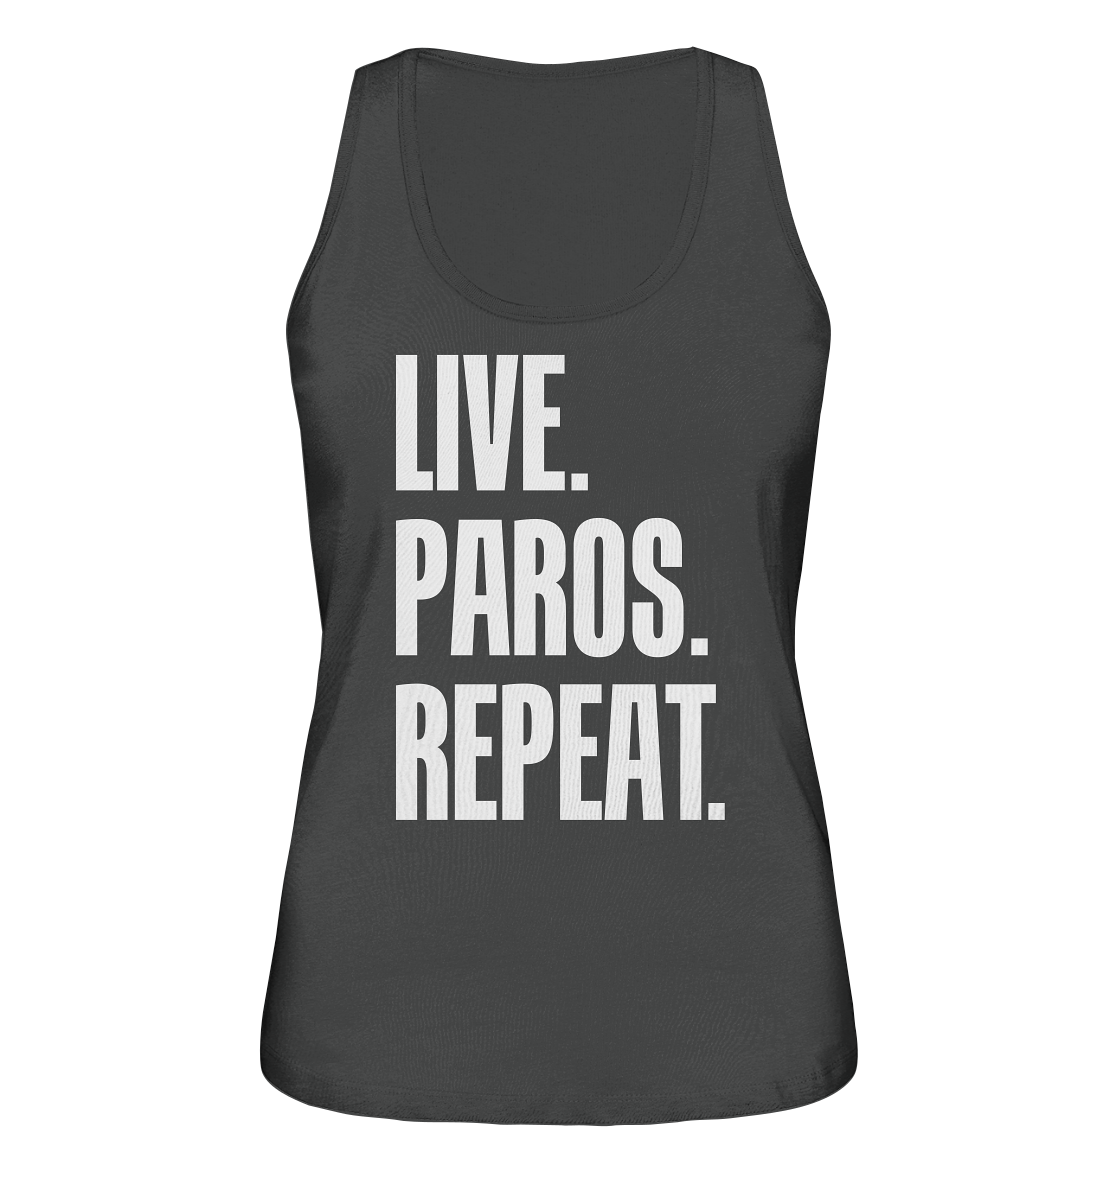 LIVE. PAROS. REPEAT. - Ladies organic tank top